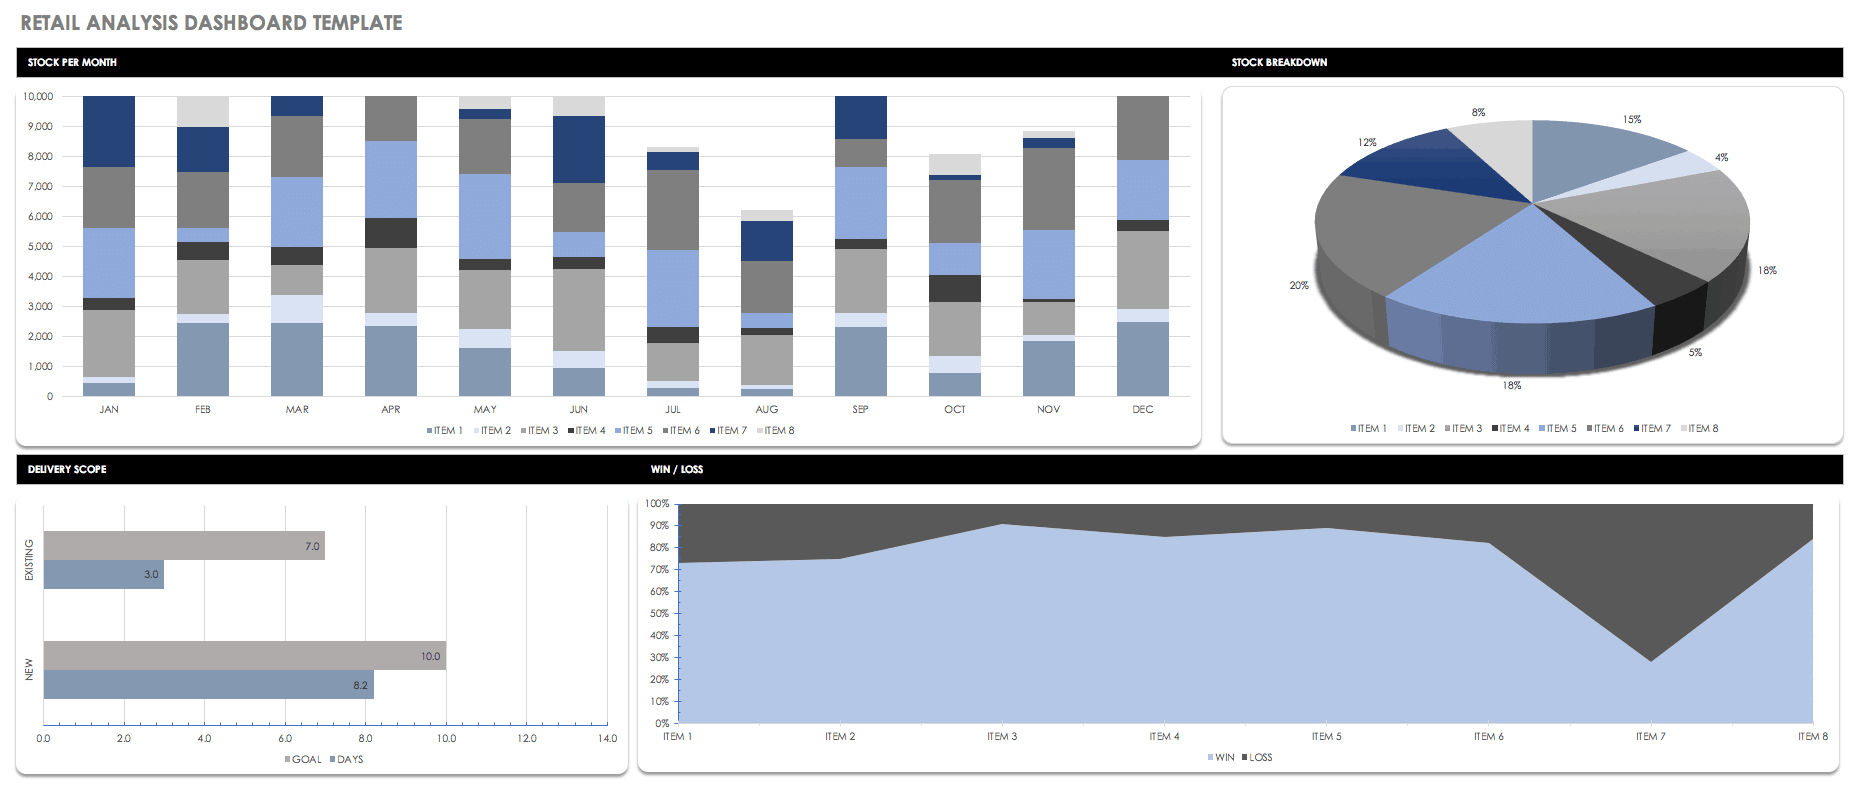 Retail Analysis Dashboard template